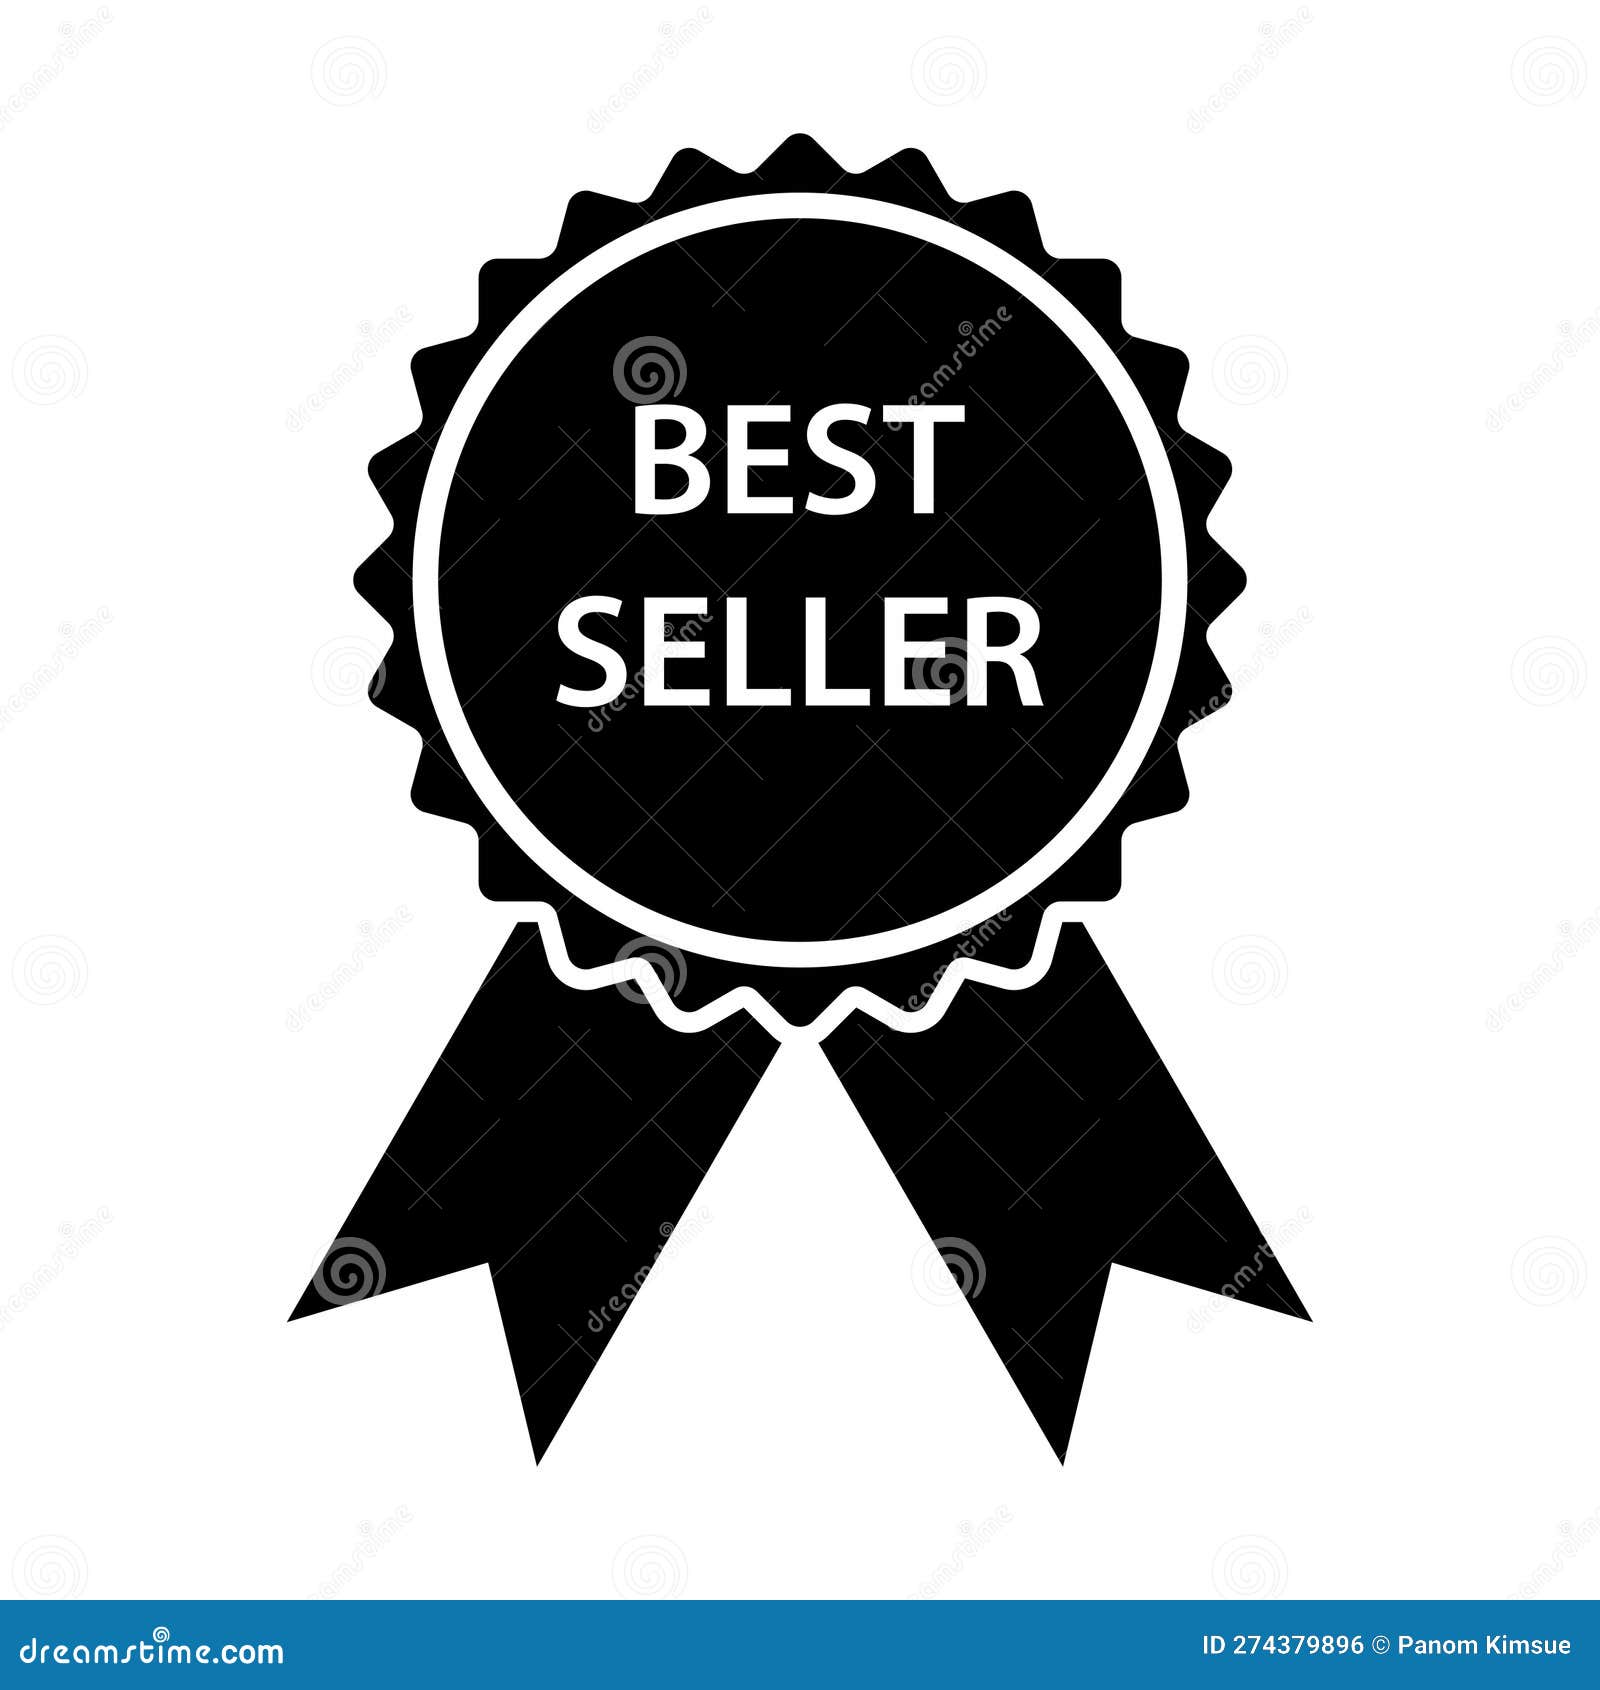 https://thumbs.dreamstime.com/z/best-seller-label-icon-vector-graphic-design-logo-website-social-media-mobile-app-ui-illustration-best-seller-label-icon-274379896.jpg